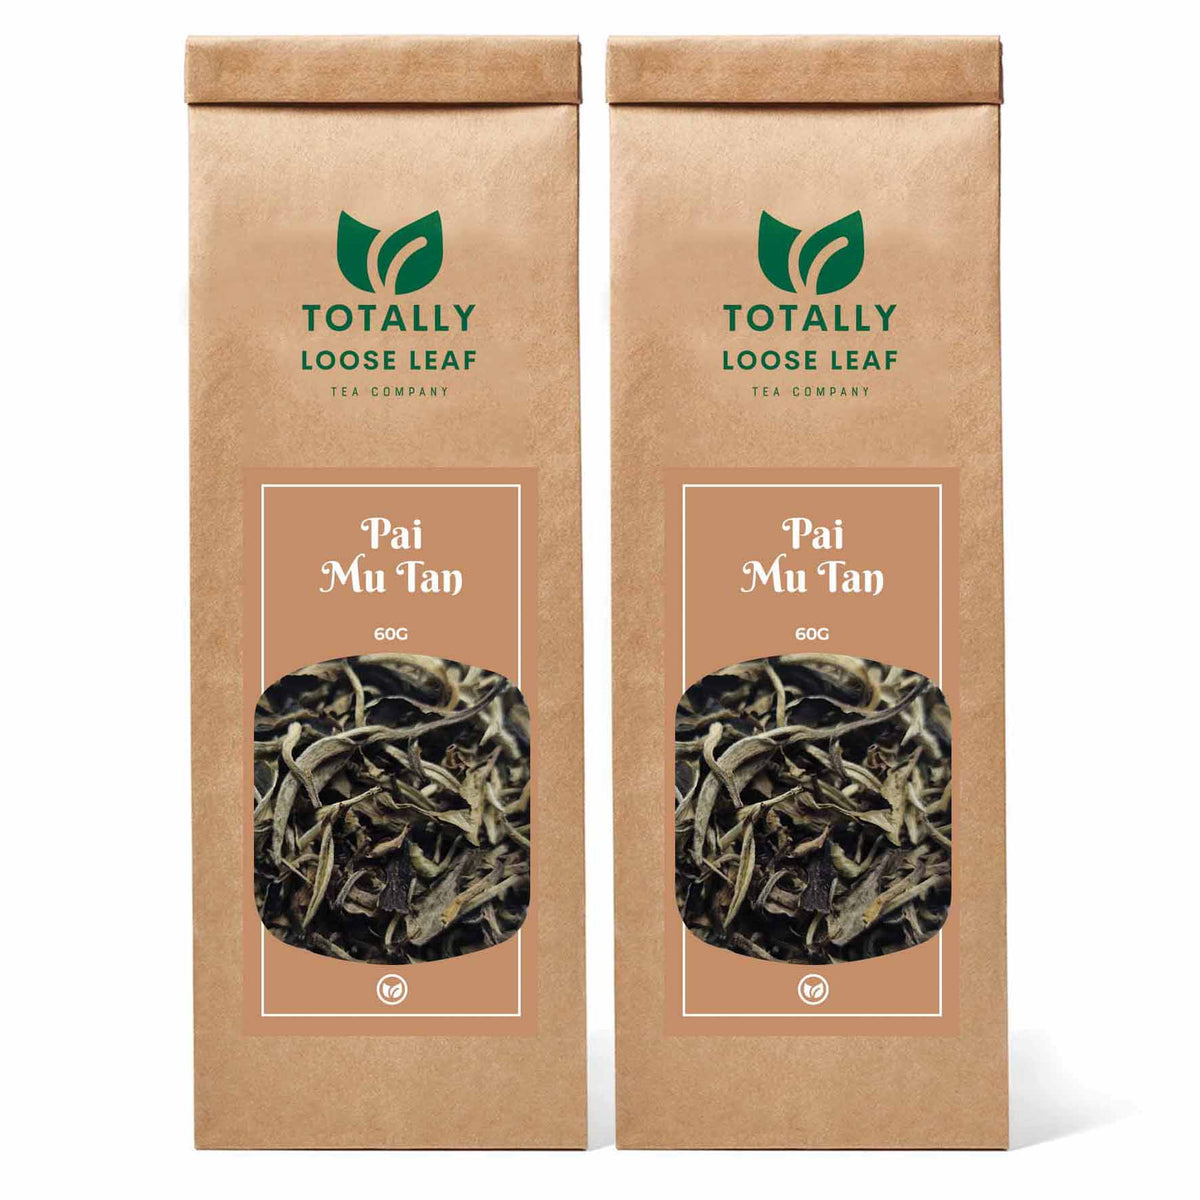 Pai Mu Tan White Loose Leaf Tea - two pouches